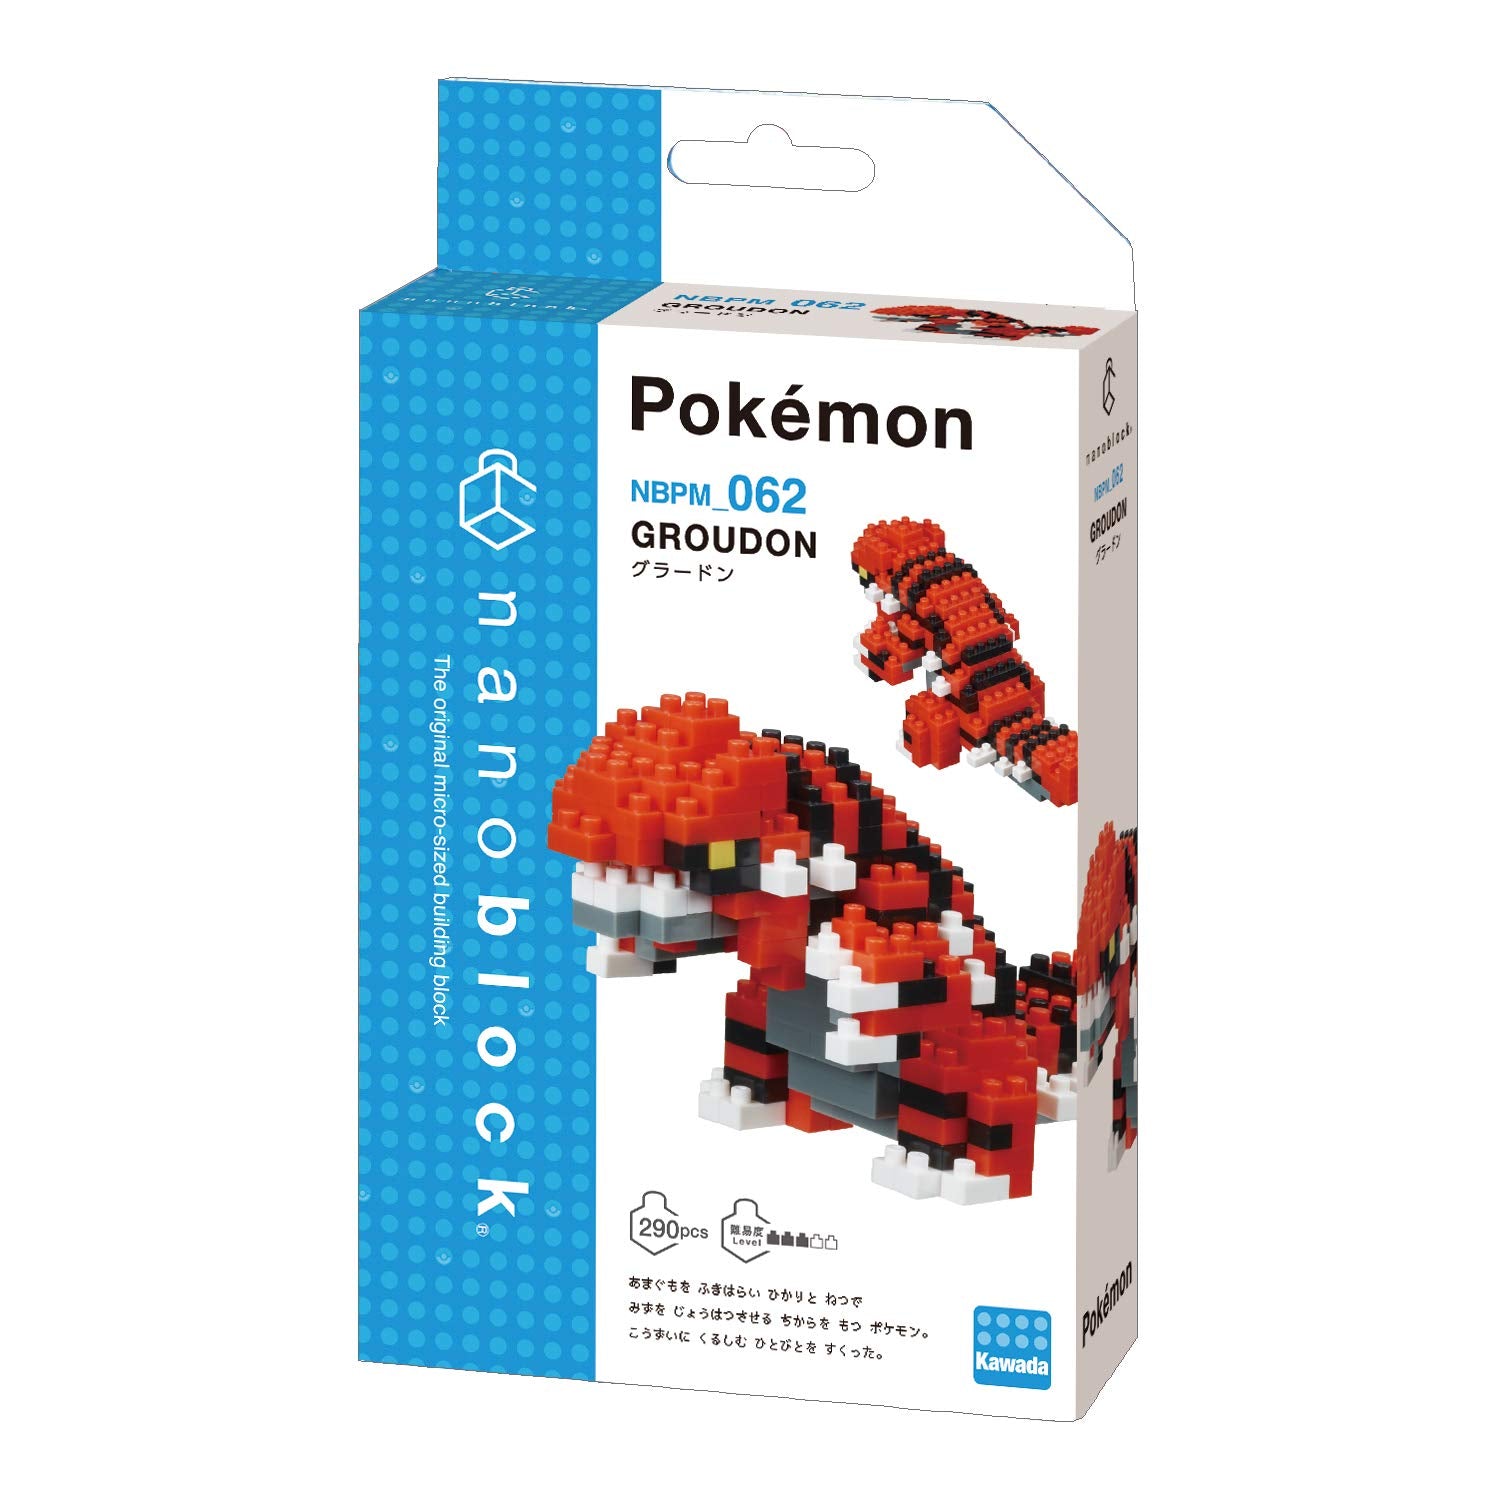 nanoblock - Groudon [Pokémon], Pokémon Series Building Kit